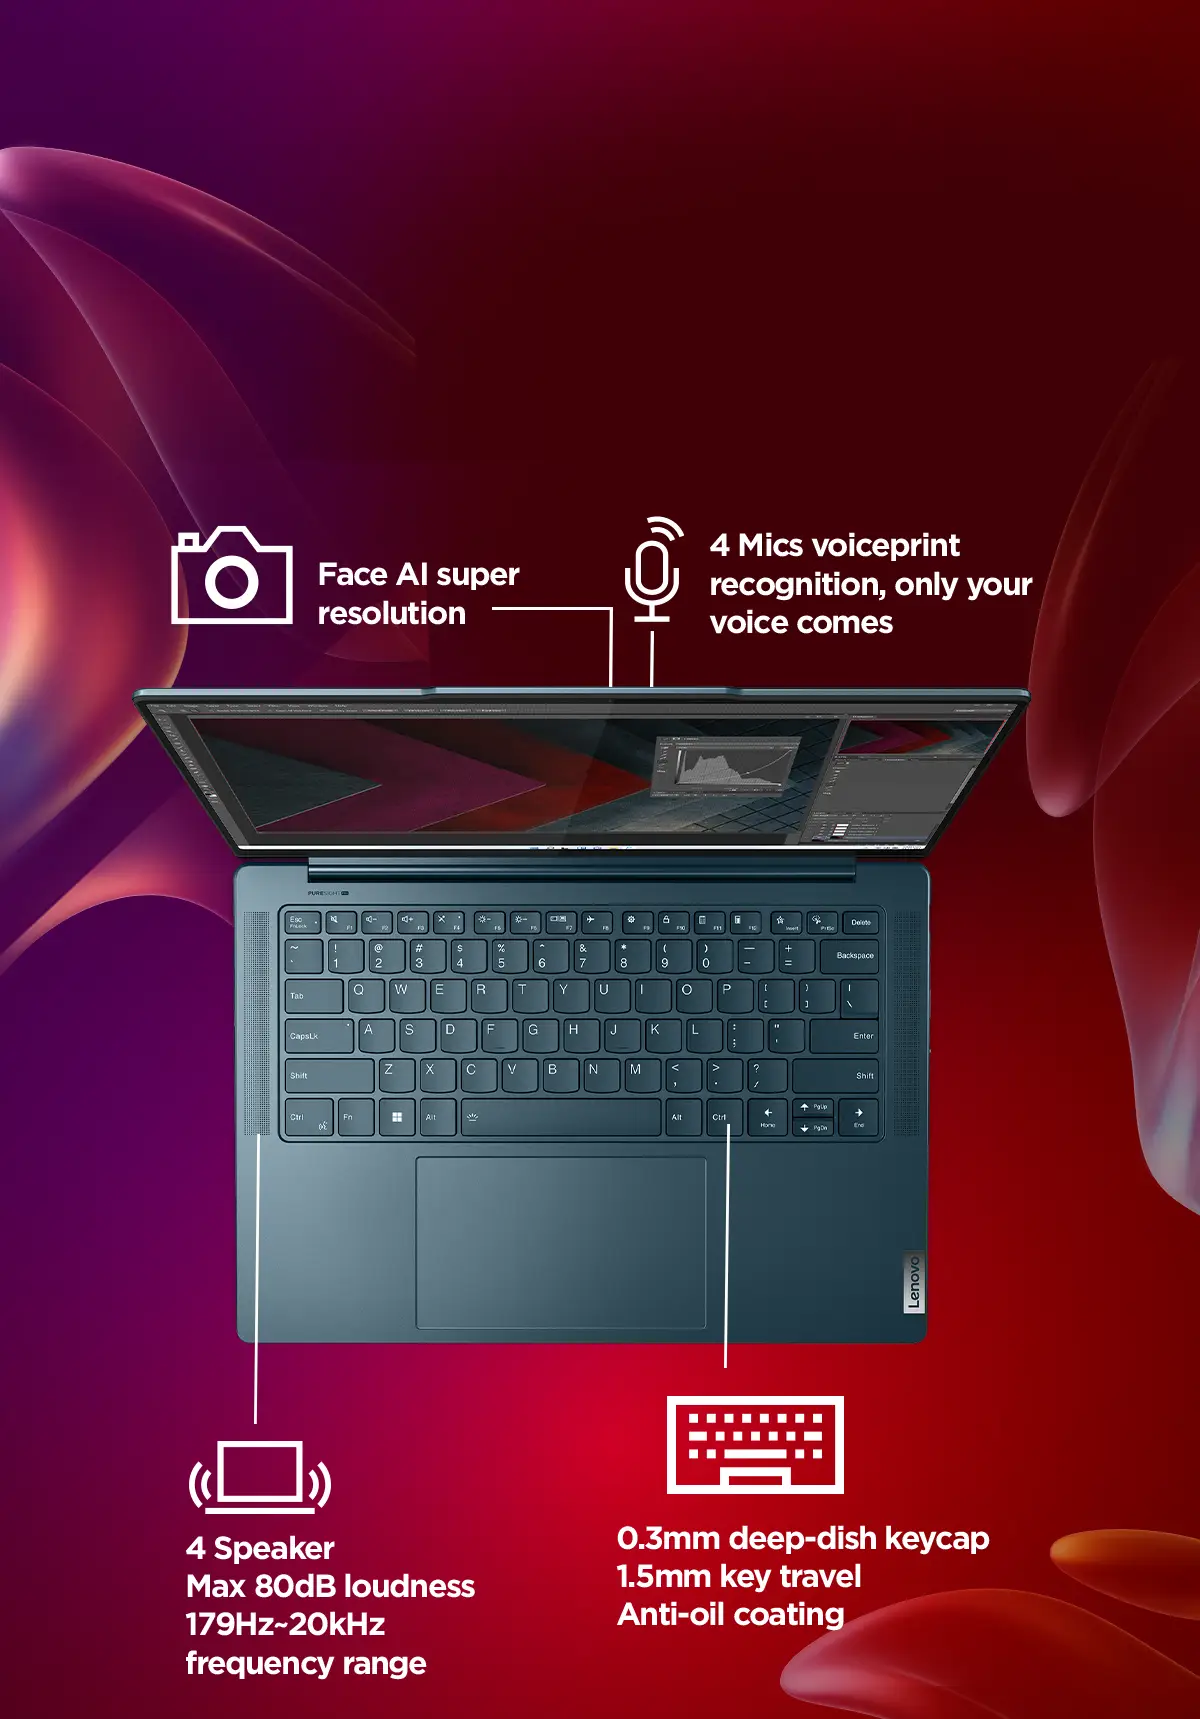 Buy LENOVO Yoga Pro 7 14.5 Laptop - Intel® Core™ i7, 512 GB SSD, Storm  Grey